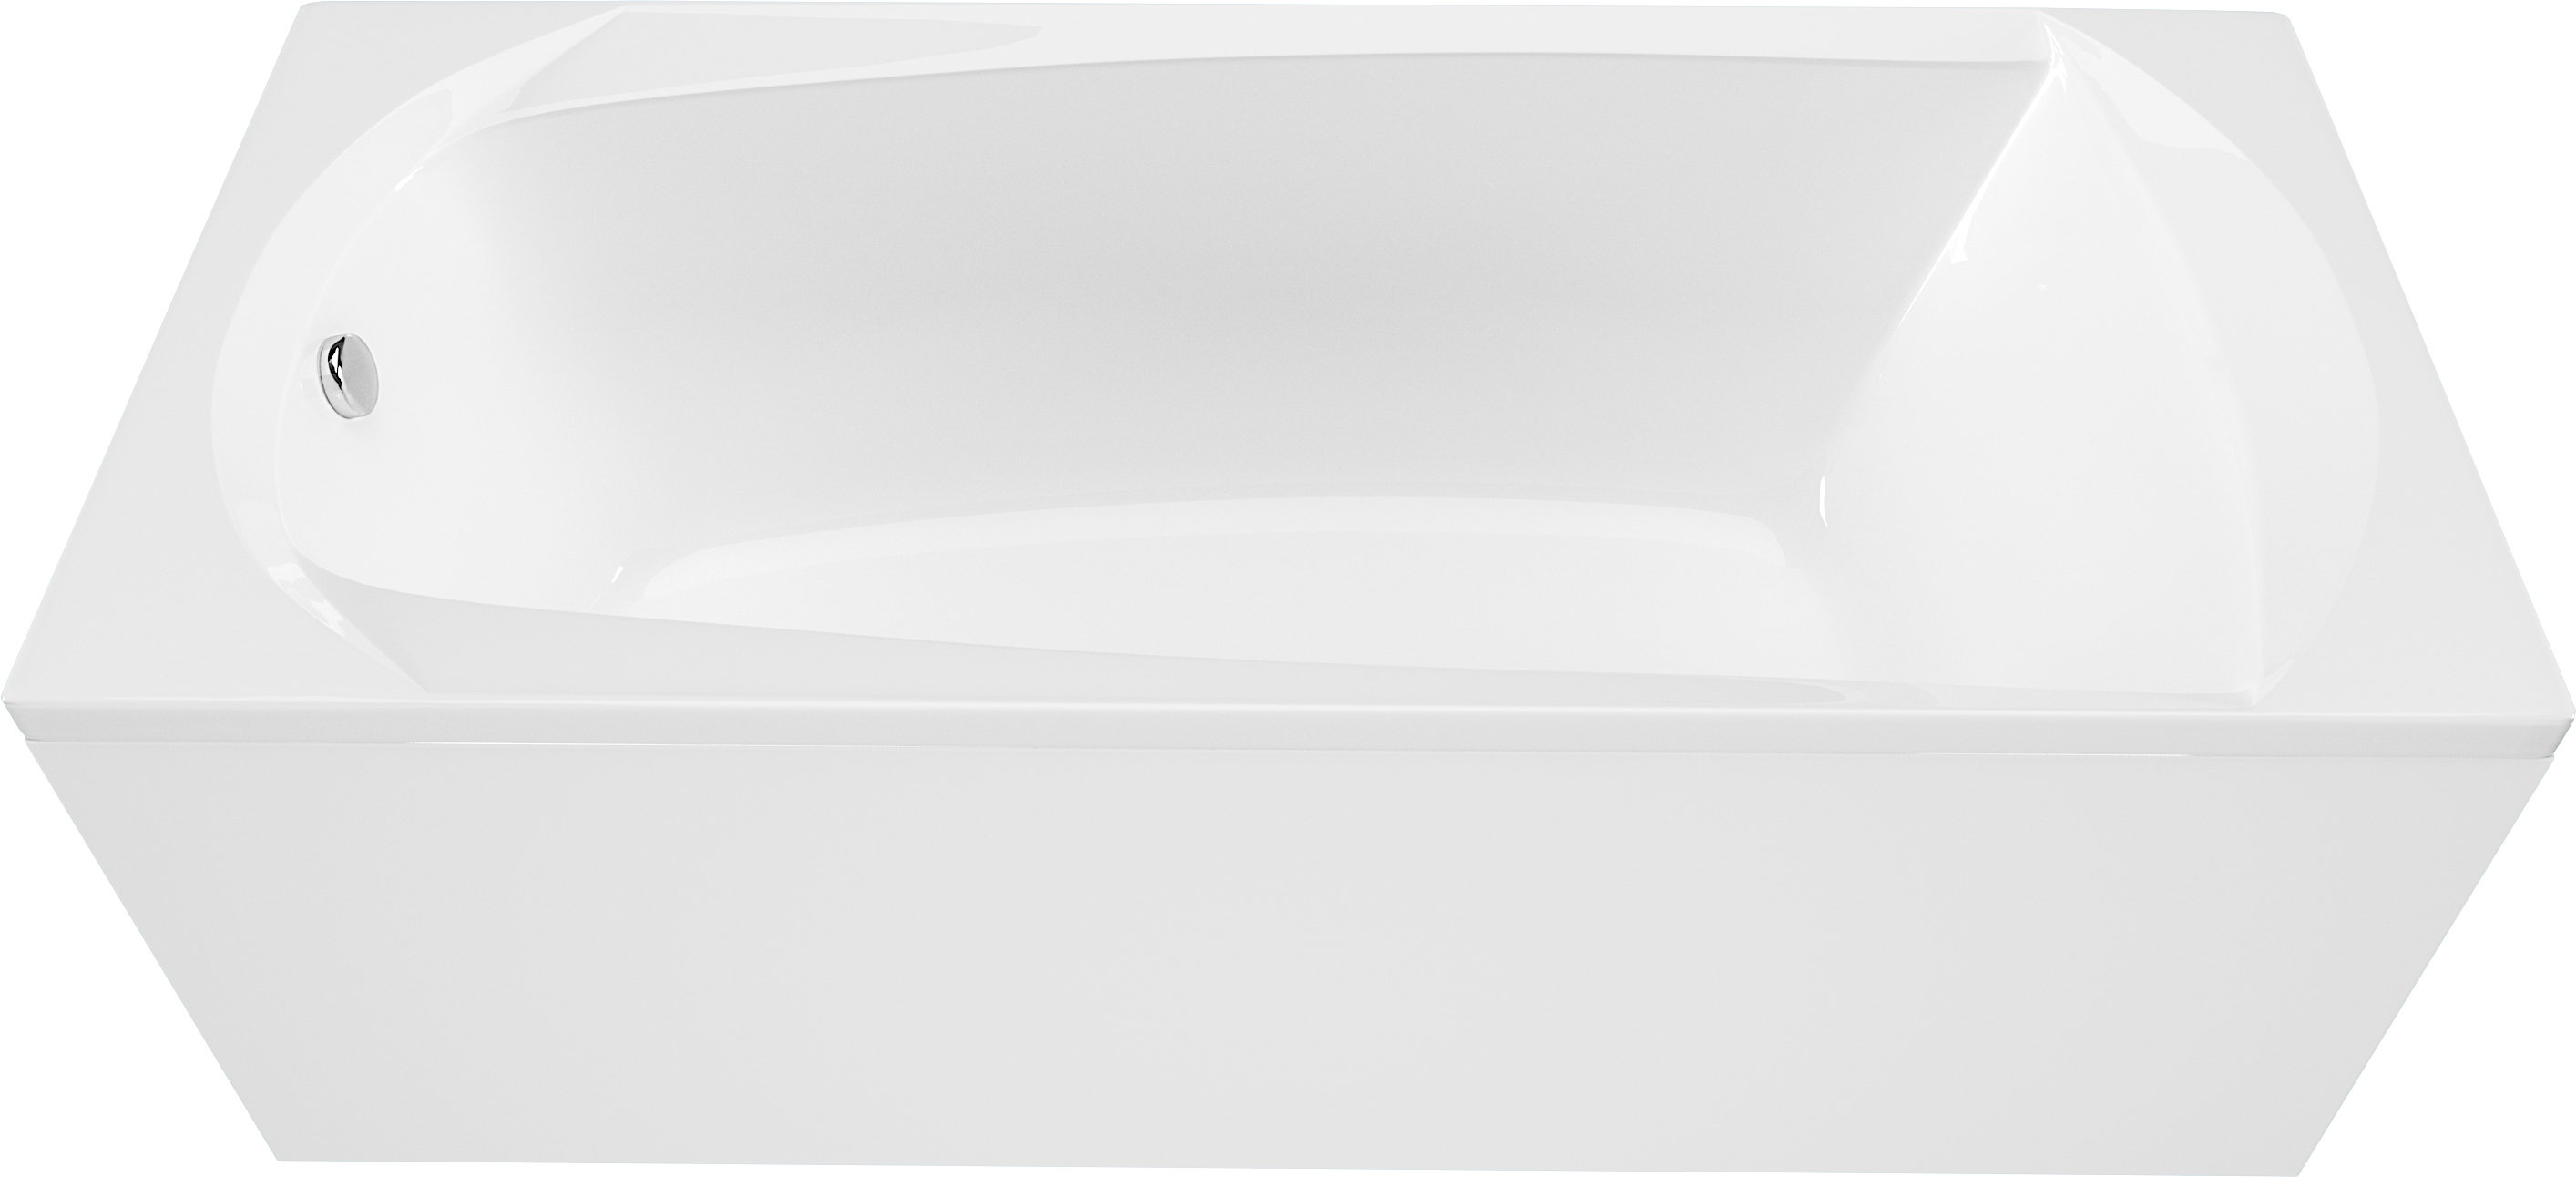 Ванна акриловая 1MarKa Elegance 120x70 01эл1270 белая, размер 120x70, цвет белый - фото 3